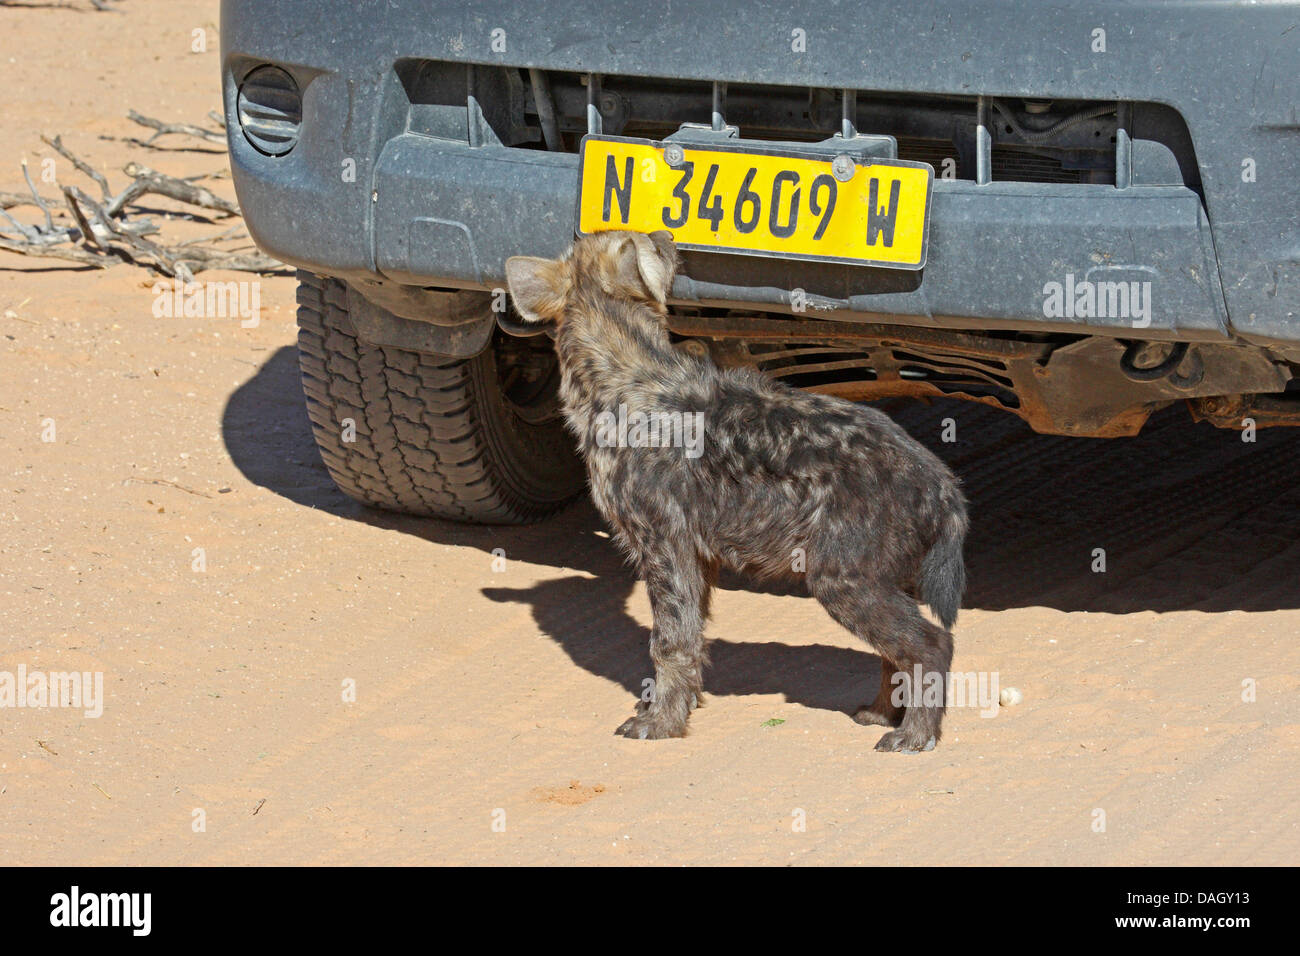 spotted hyena (Crocuta crocuta), juvenile at a car, South Africa, Kgalagadi Transfrontier National Park Stock Photo